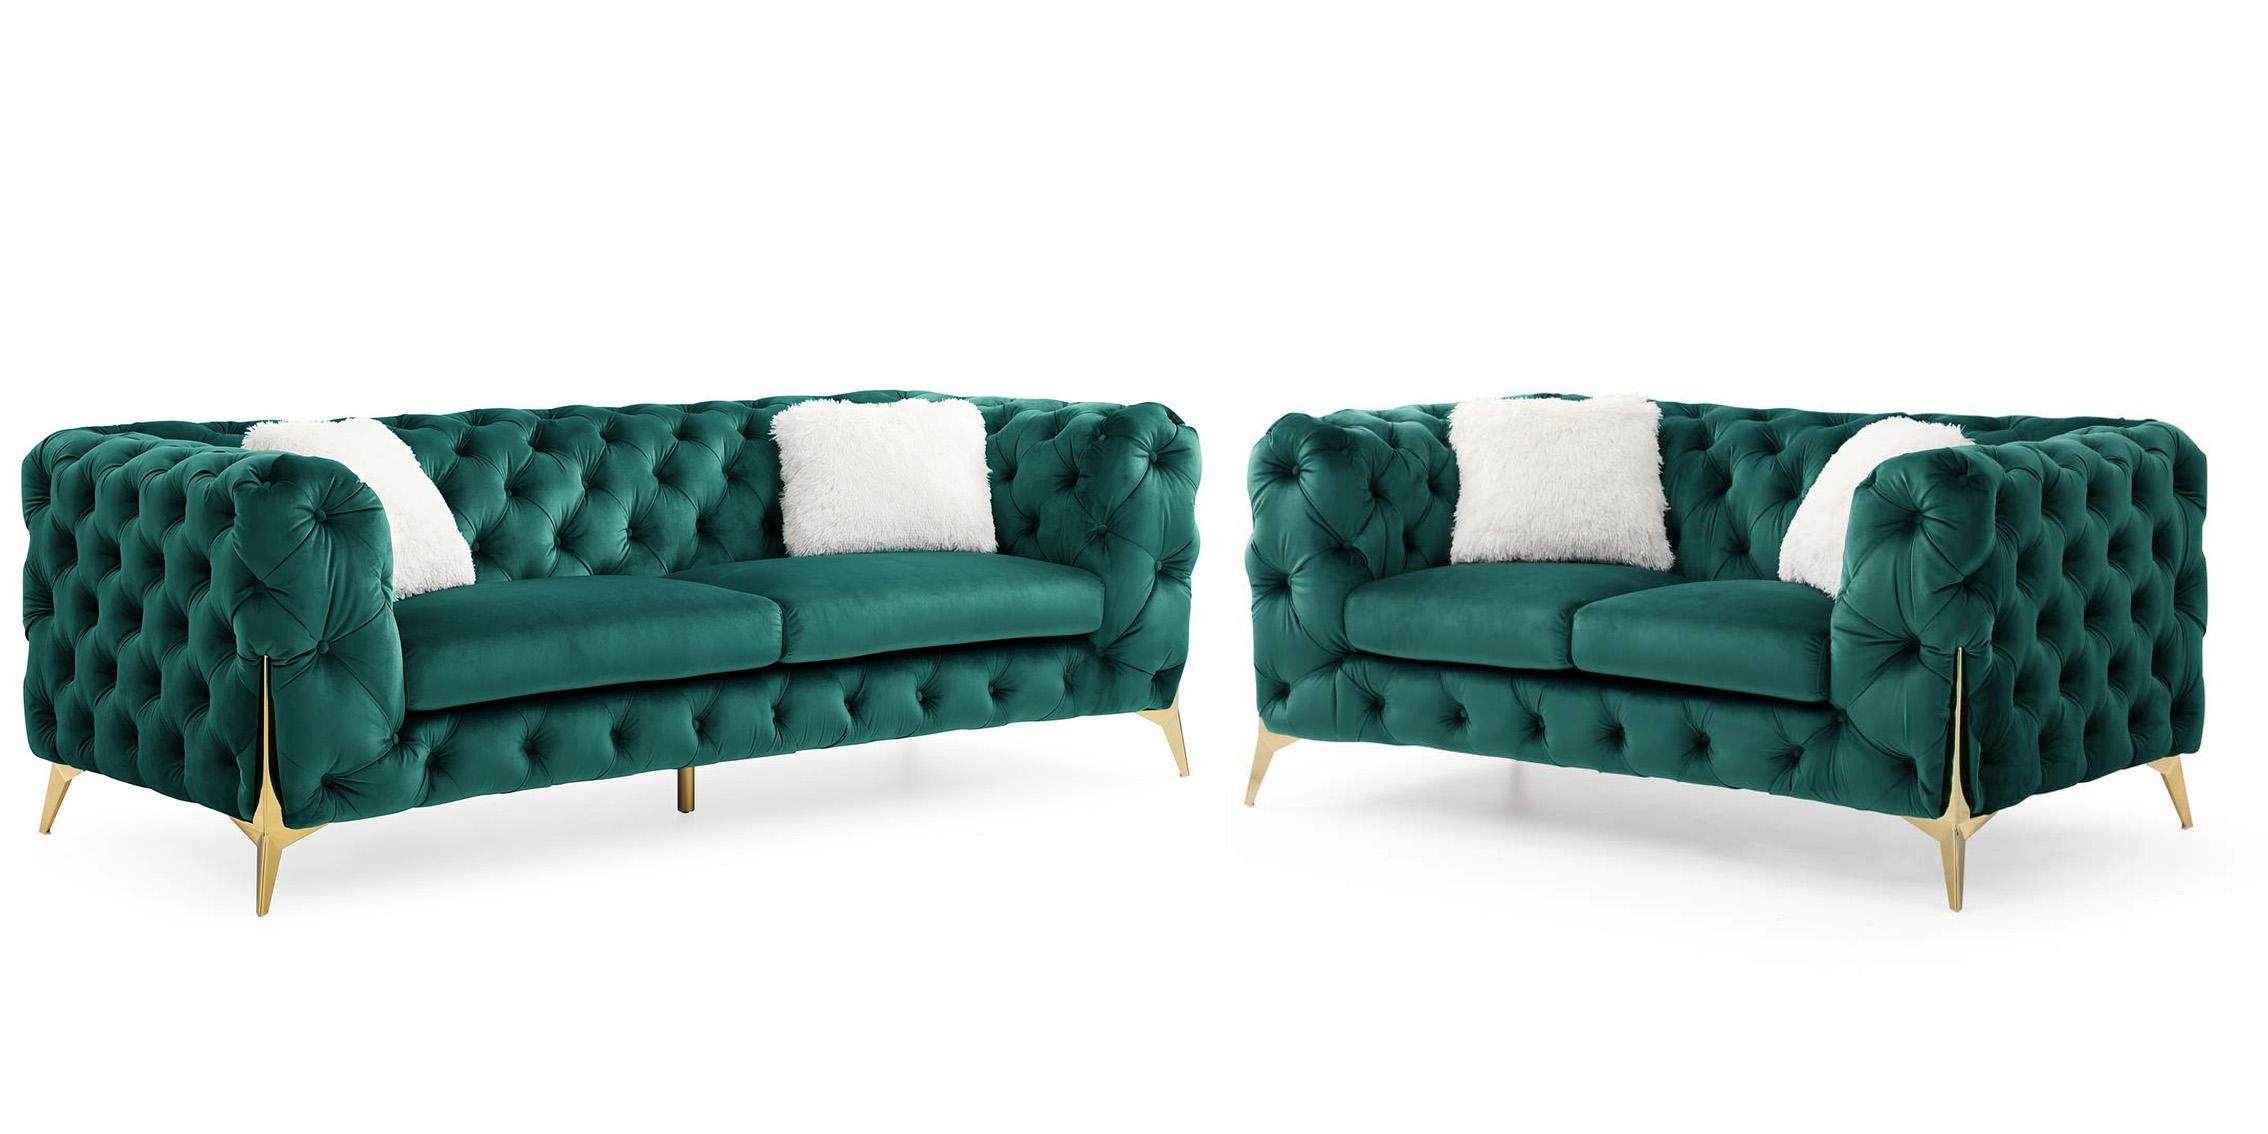 Contemporary, Modern Sofa Set MODERNO GHF-808857768919 in Green Fabric